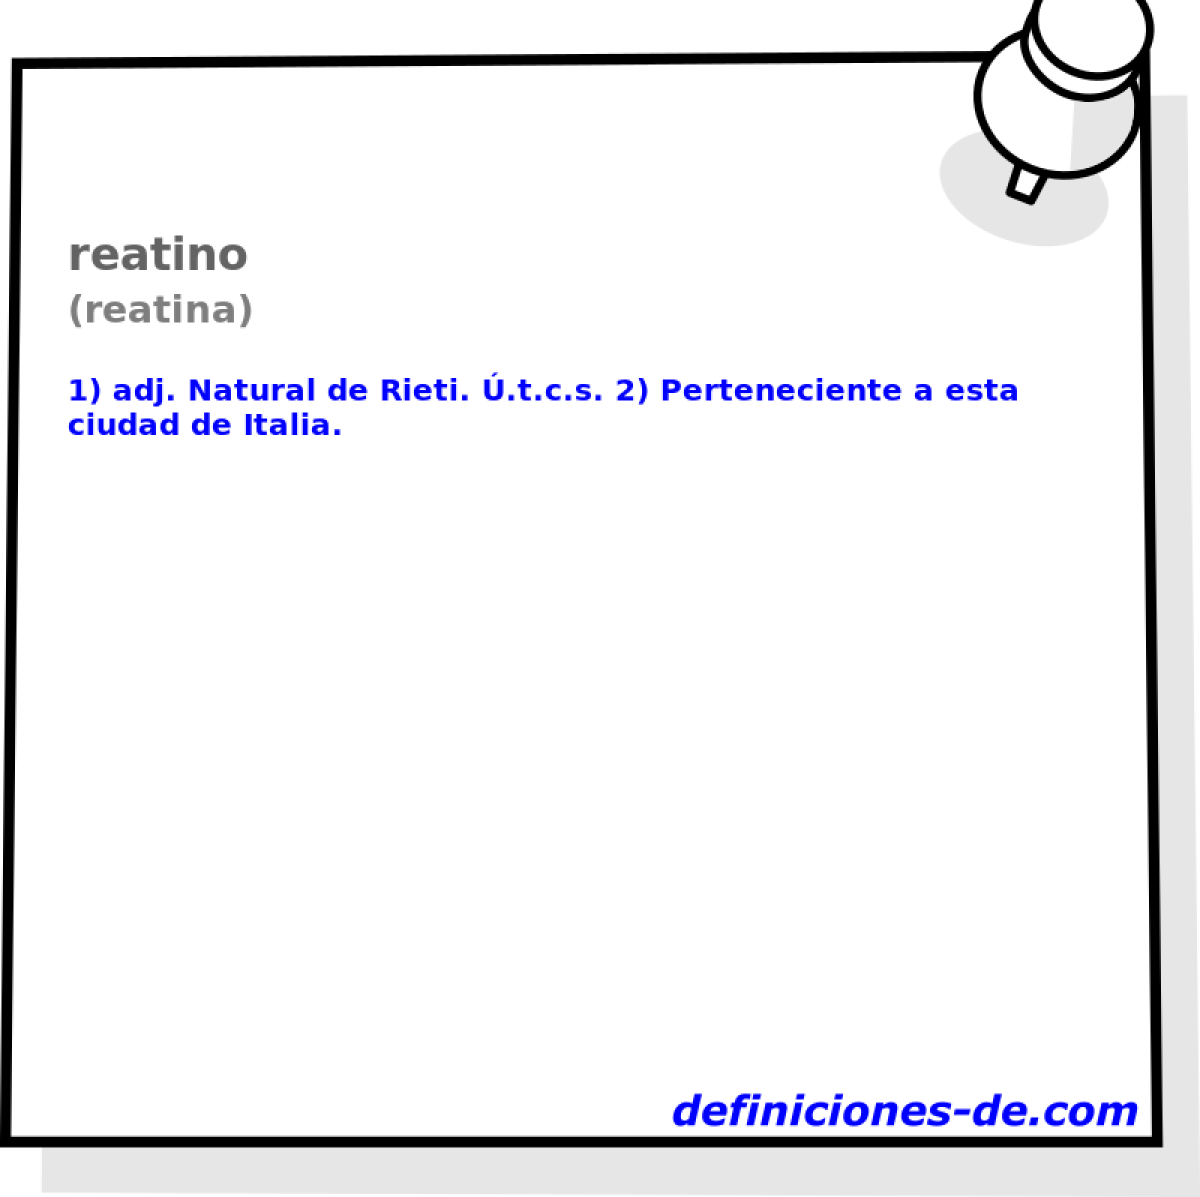 reatino (reatina)